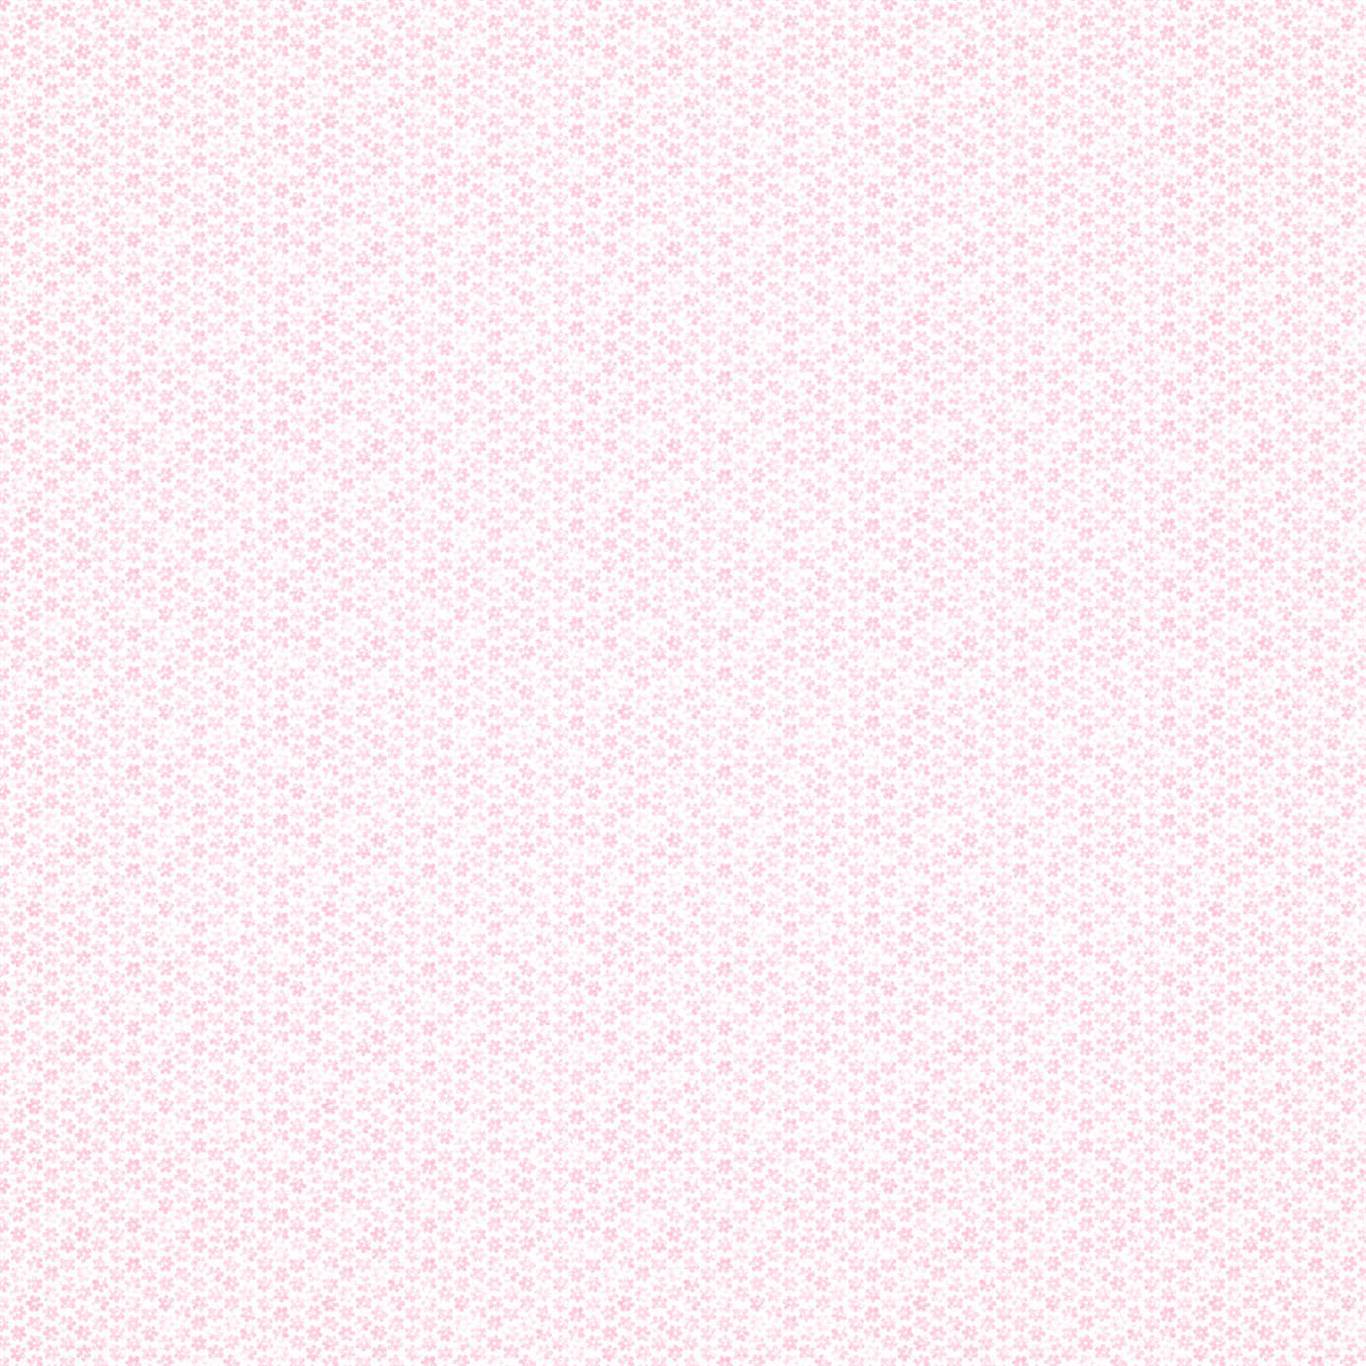 Ditsy Daisy Soft Pink Wallpaper by HAR